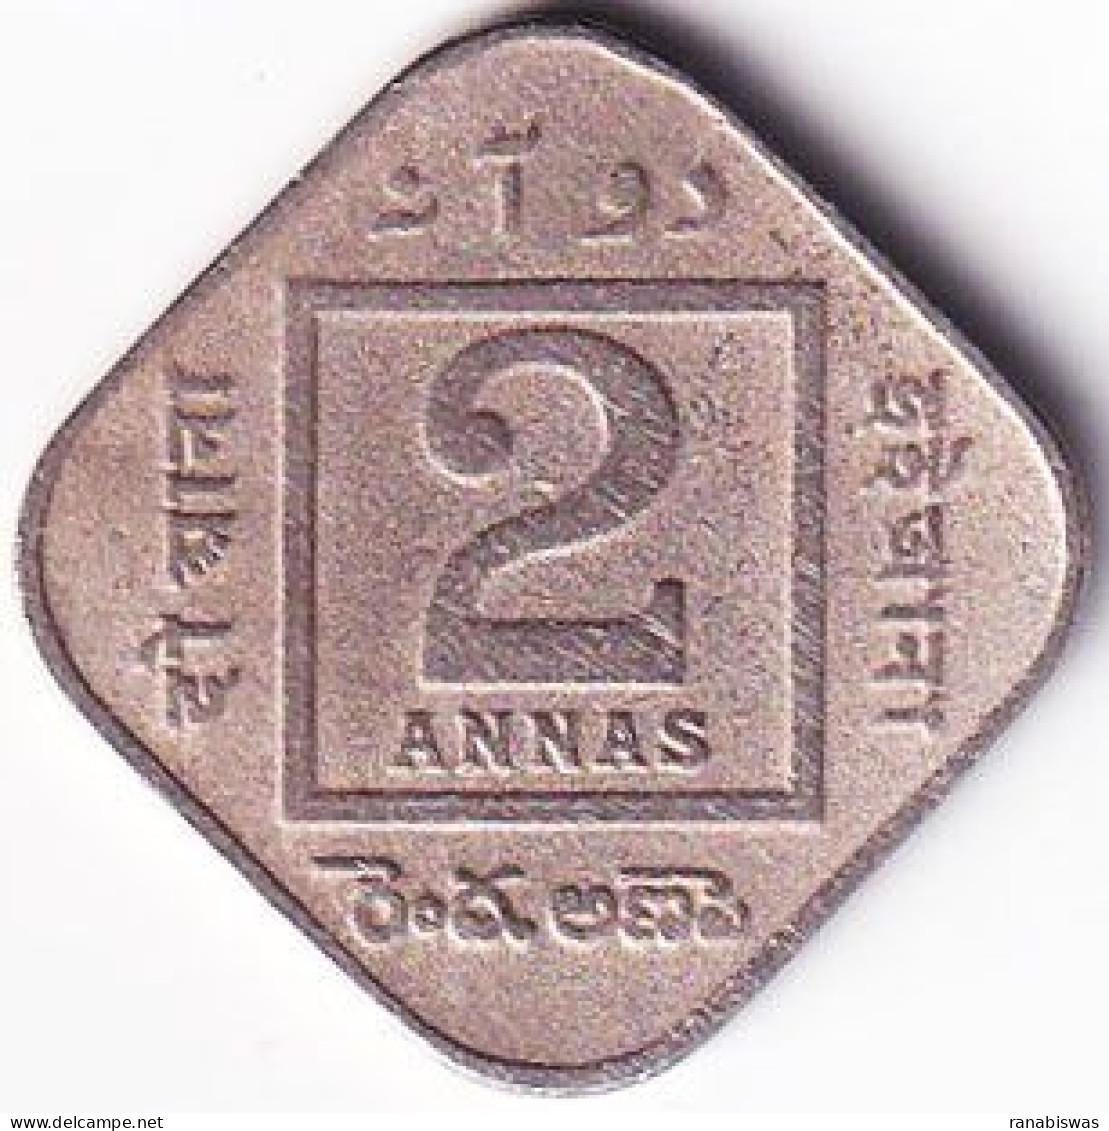 INDIA COIN LOT 180, 2 ANNAS 1919, CALCUTTA MINT, XF, SCARE - India